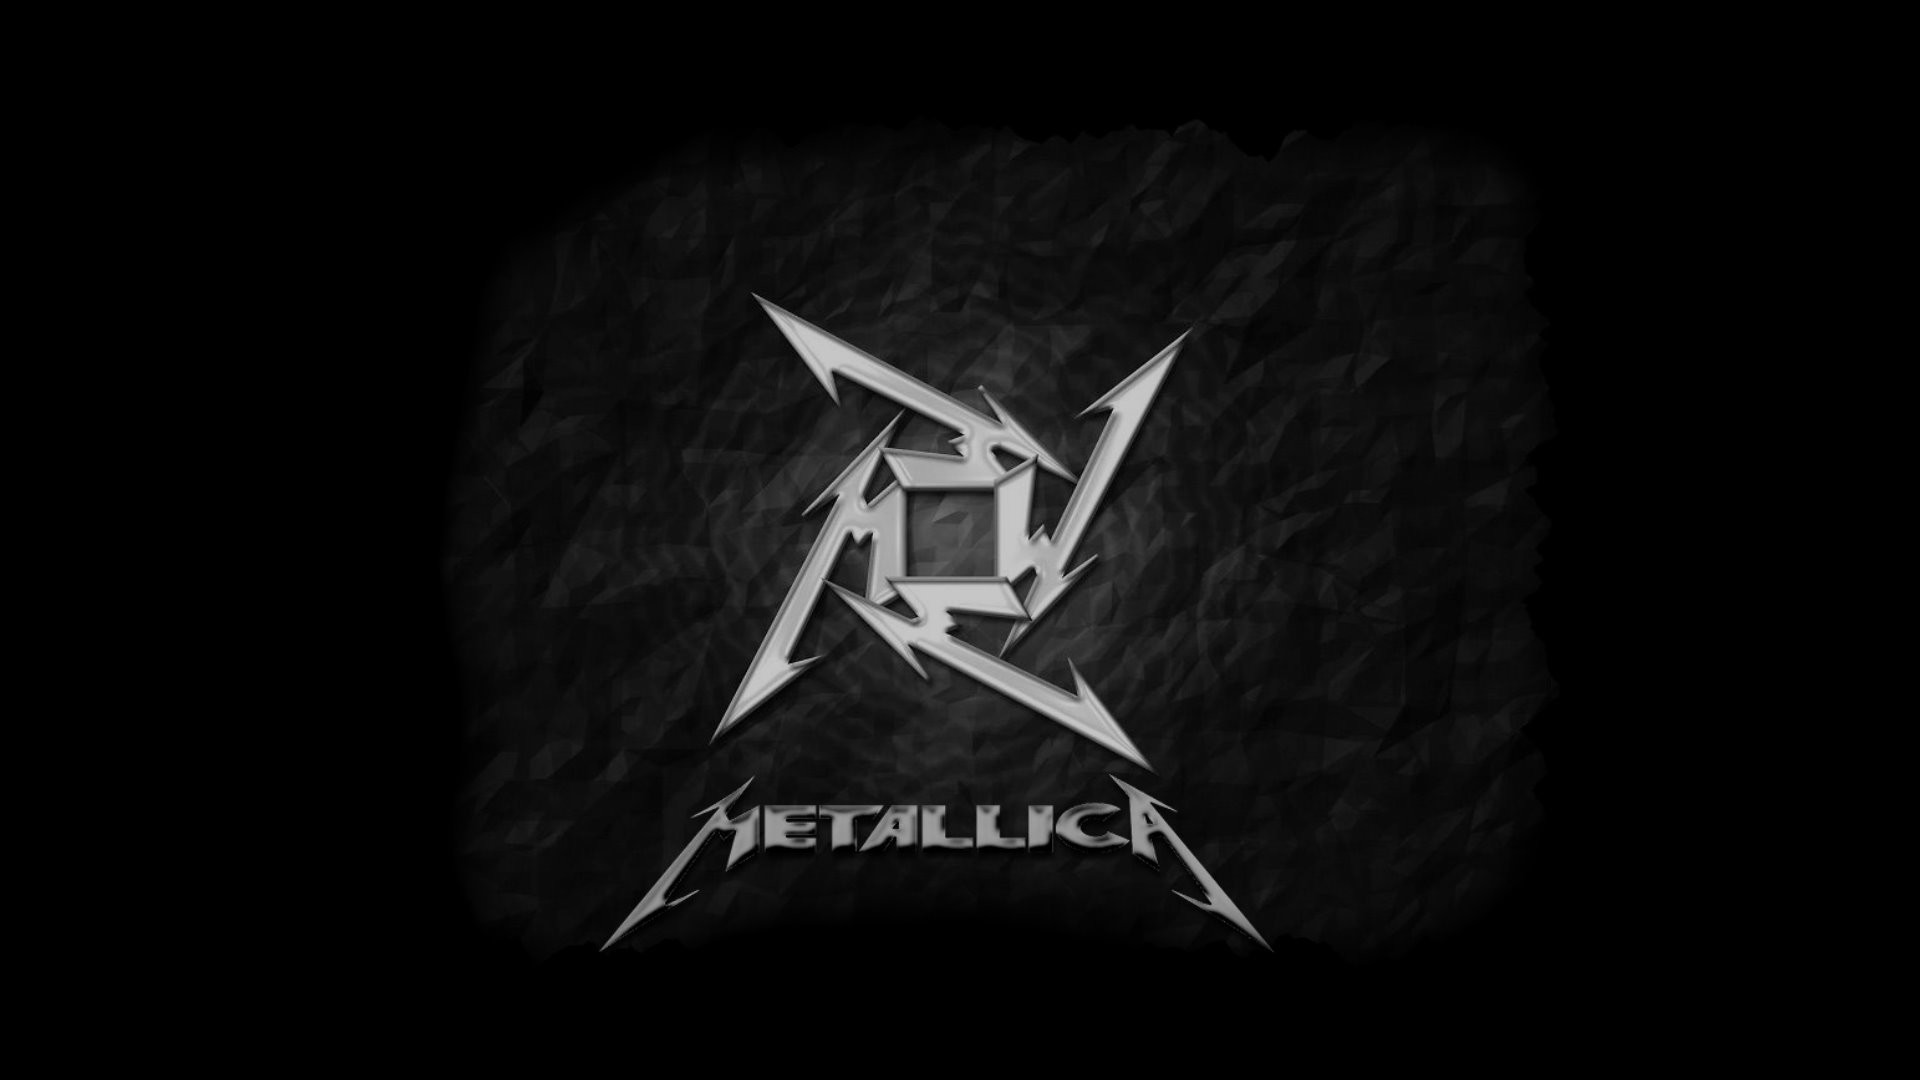 1920x1080 Top Metallica Music Background For Images for Pinterest | Download Wallpaper  | Pinterest | Metallica music